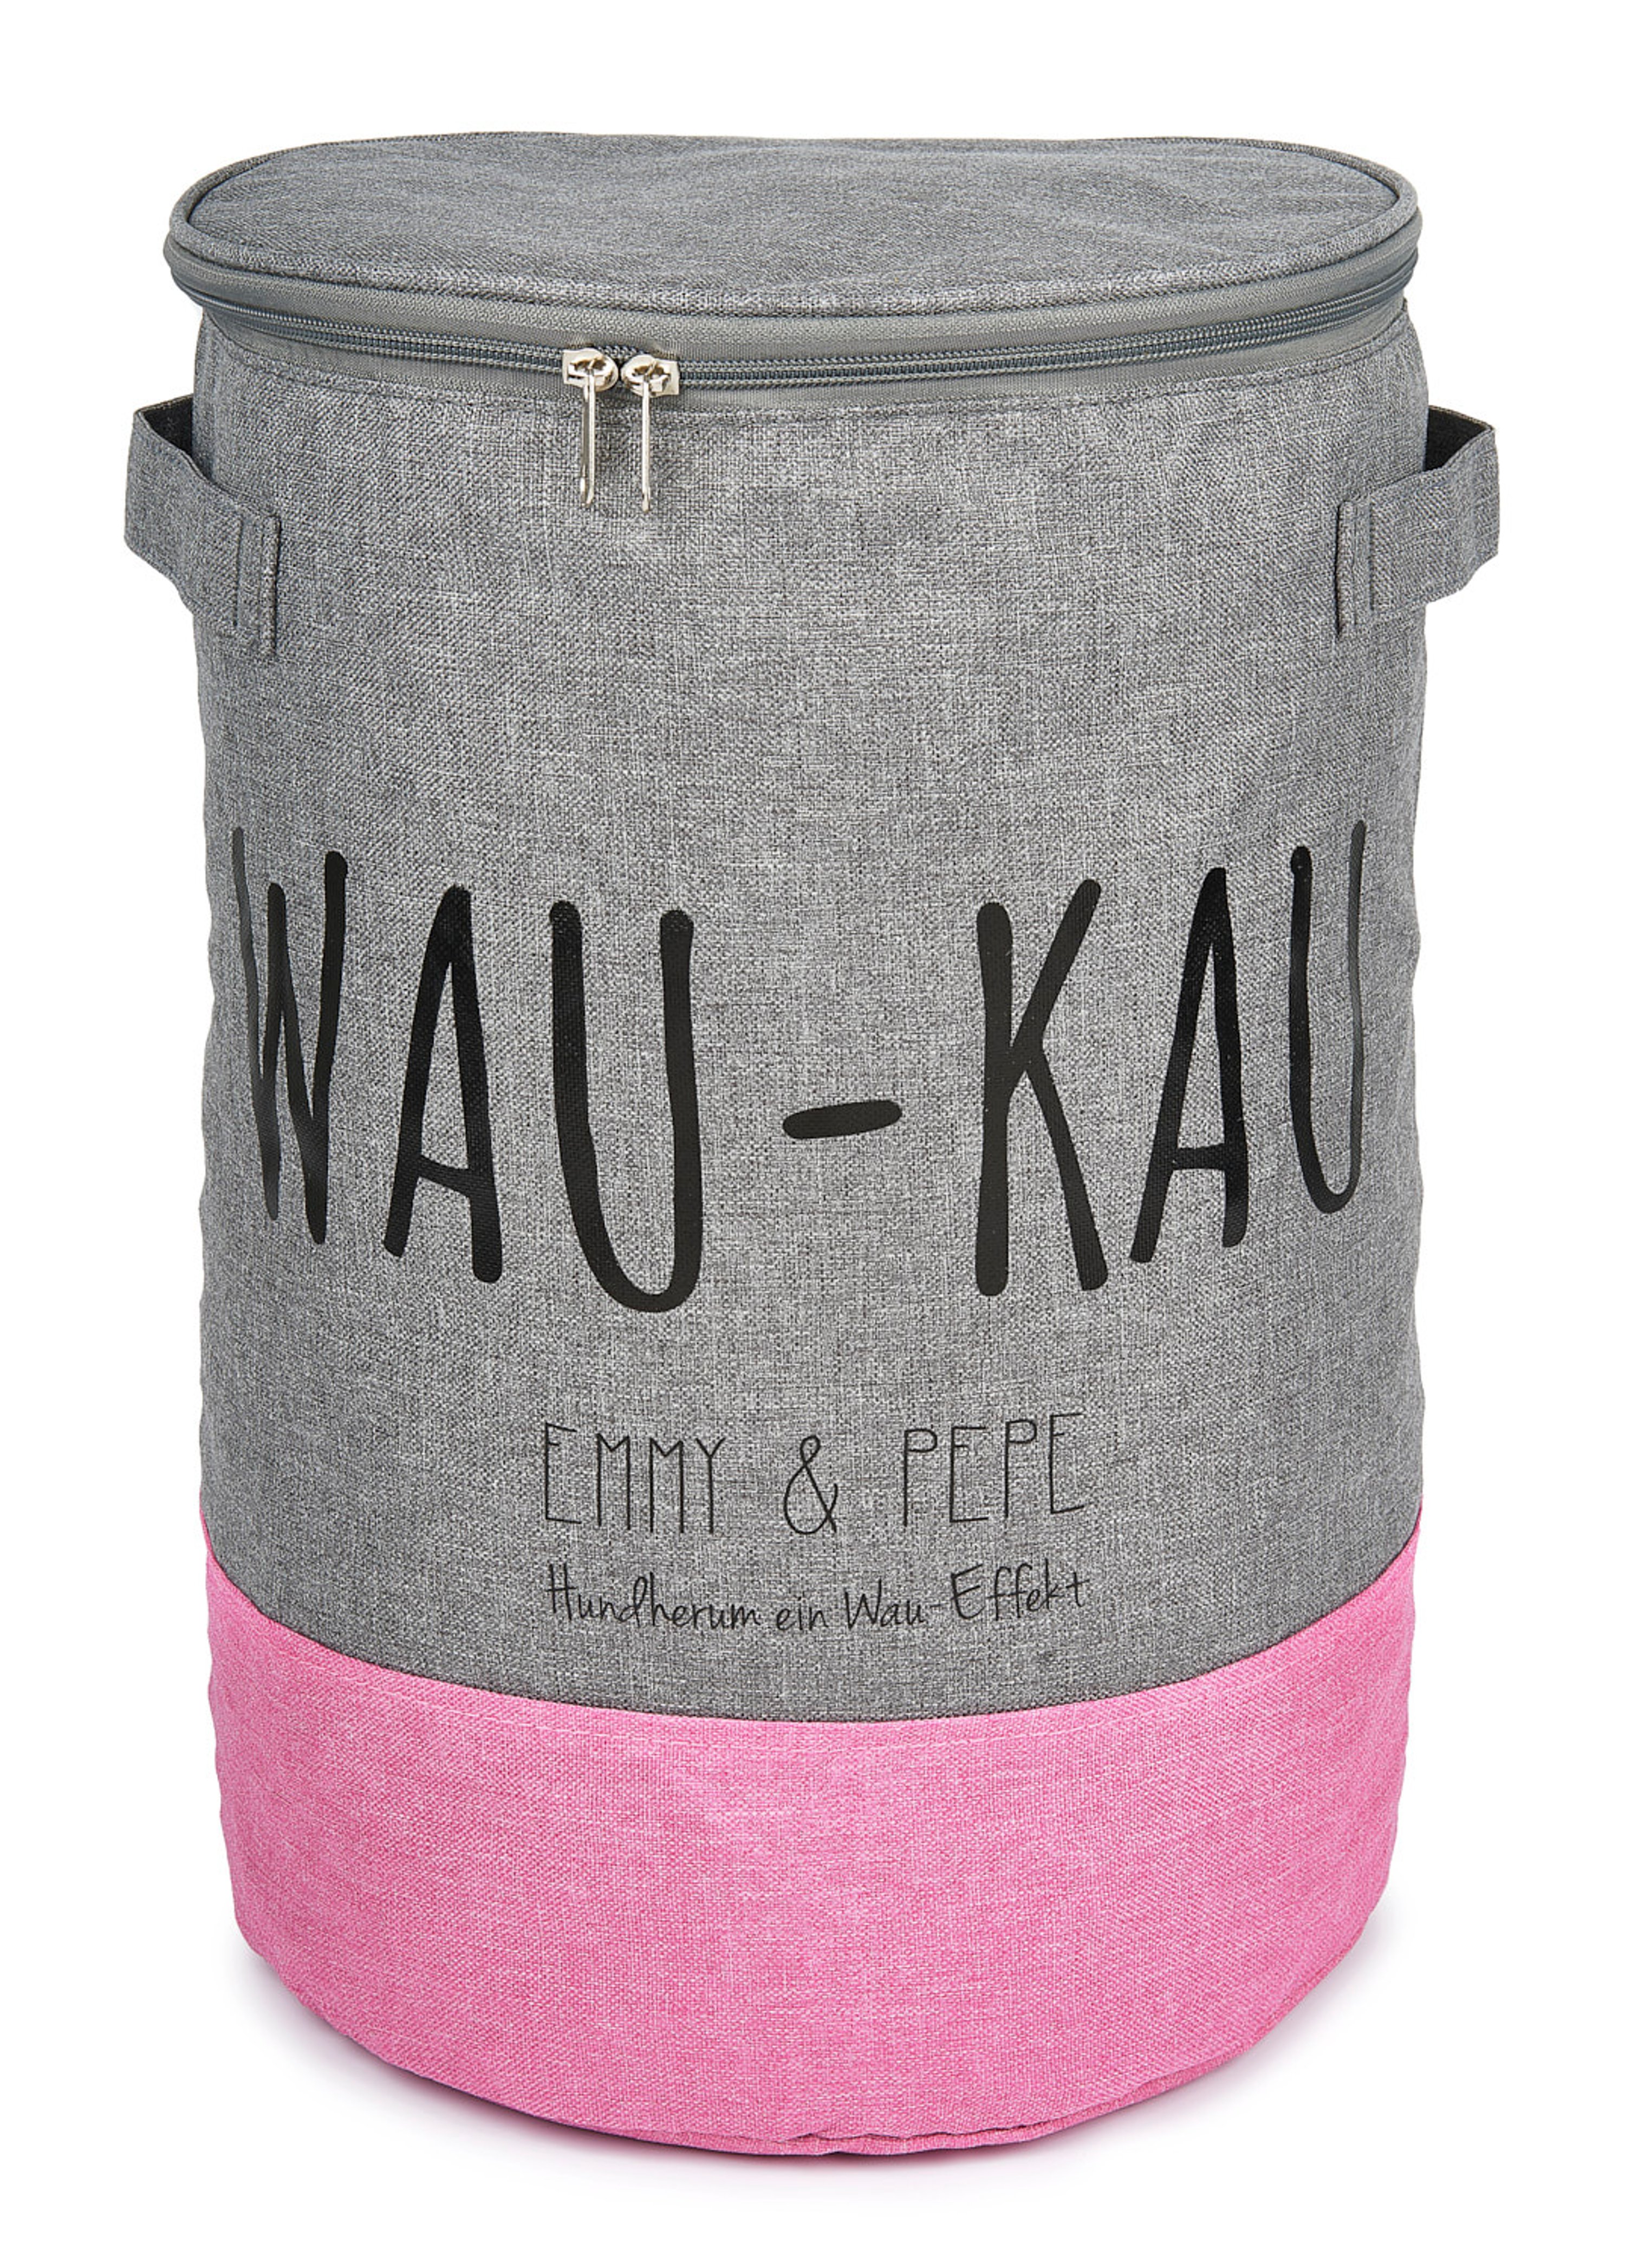 Wau-Kau Feeding Bag Pink